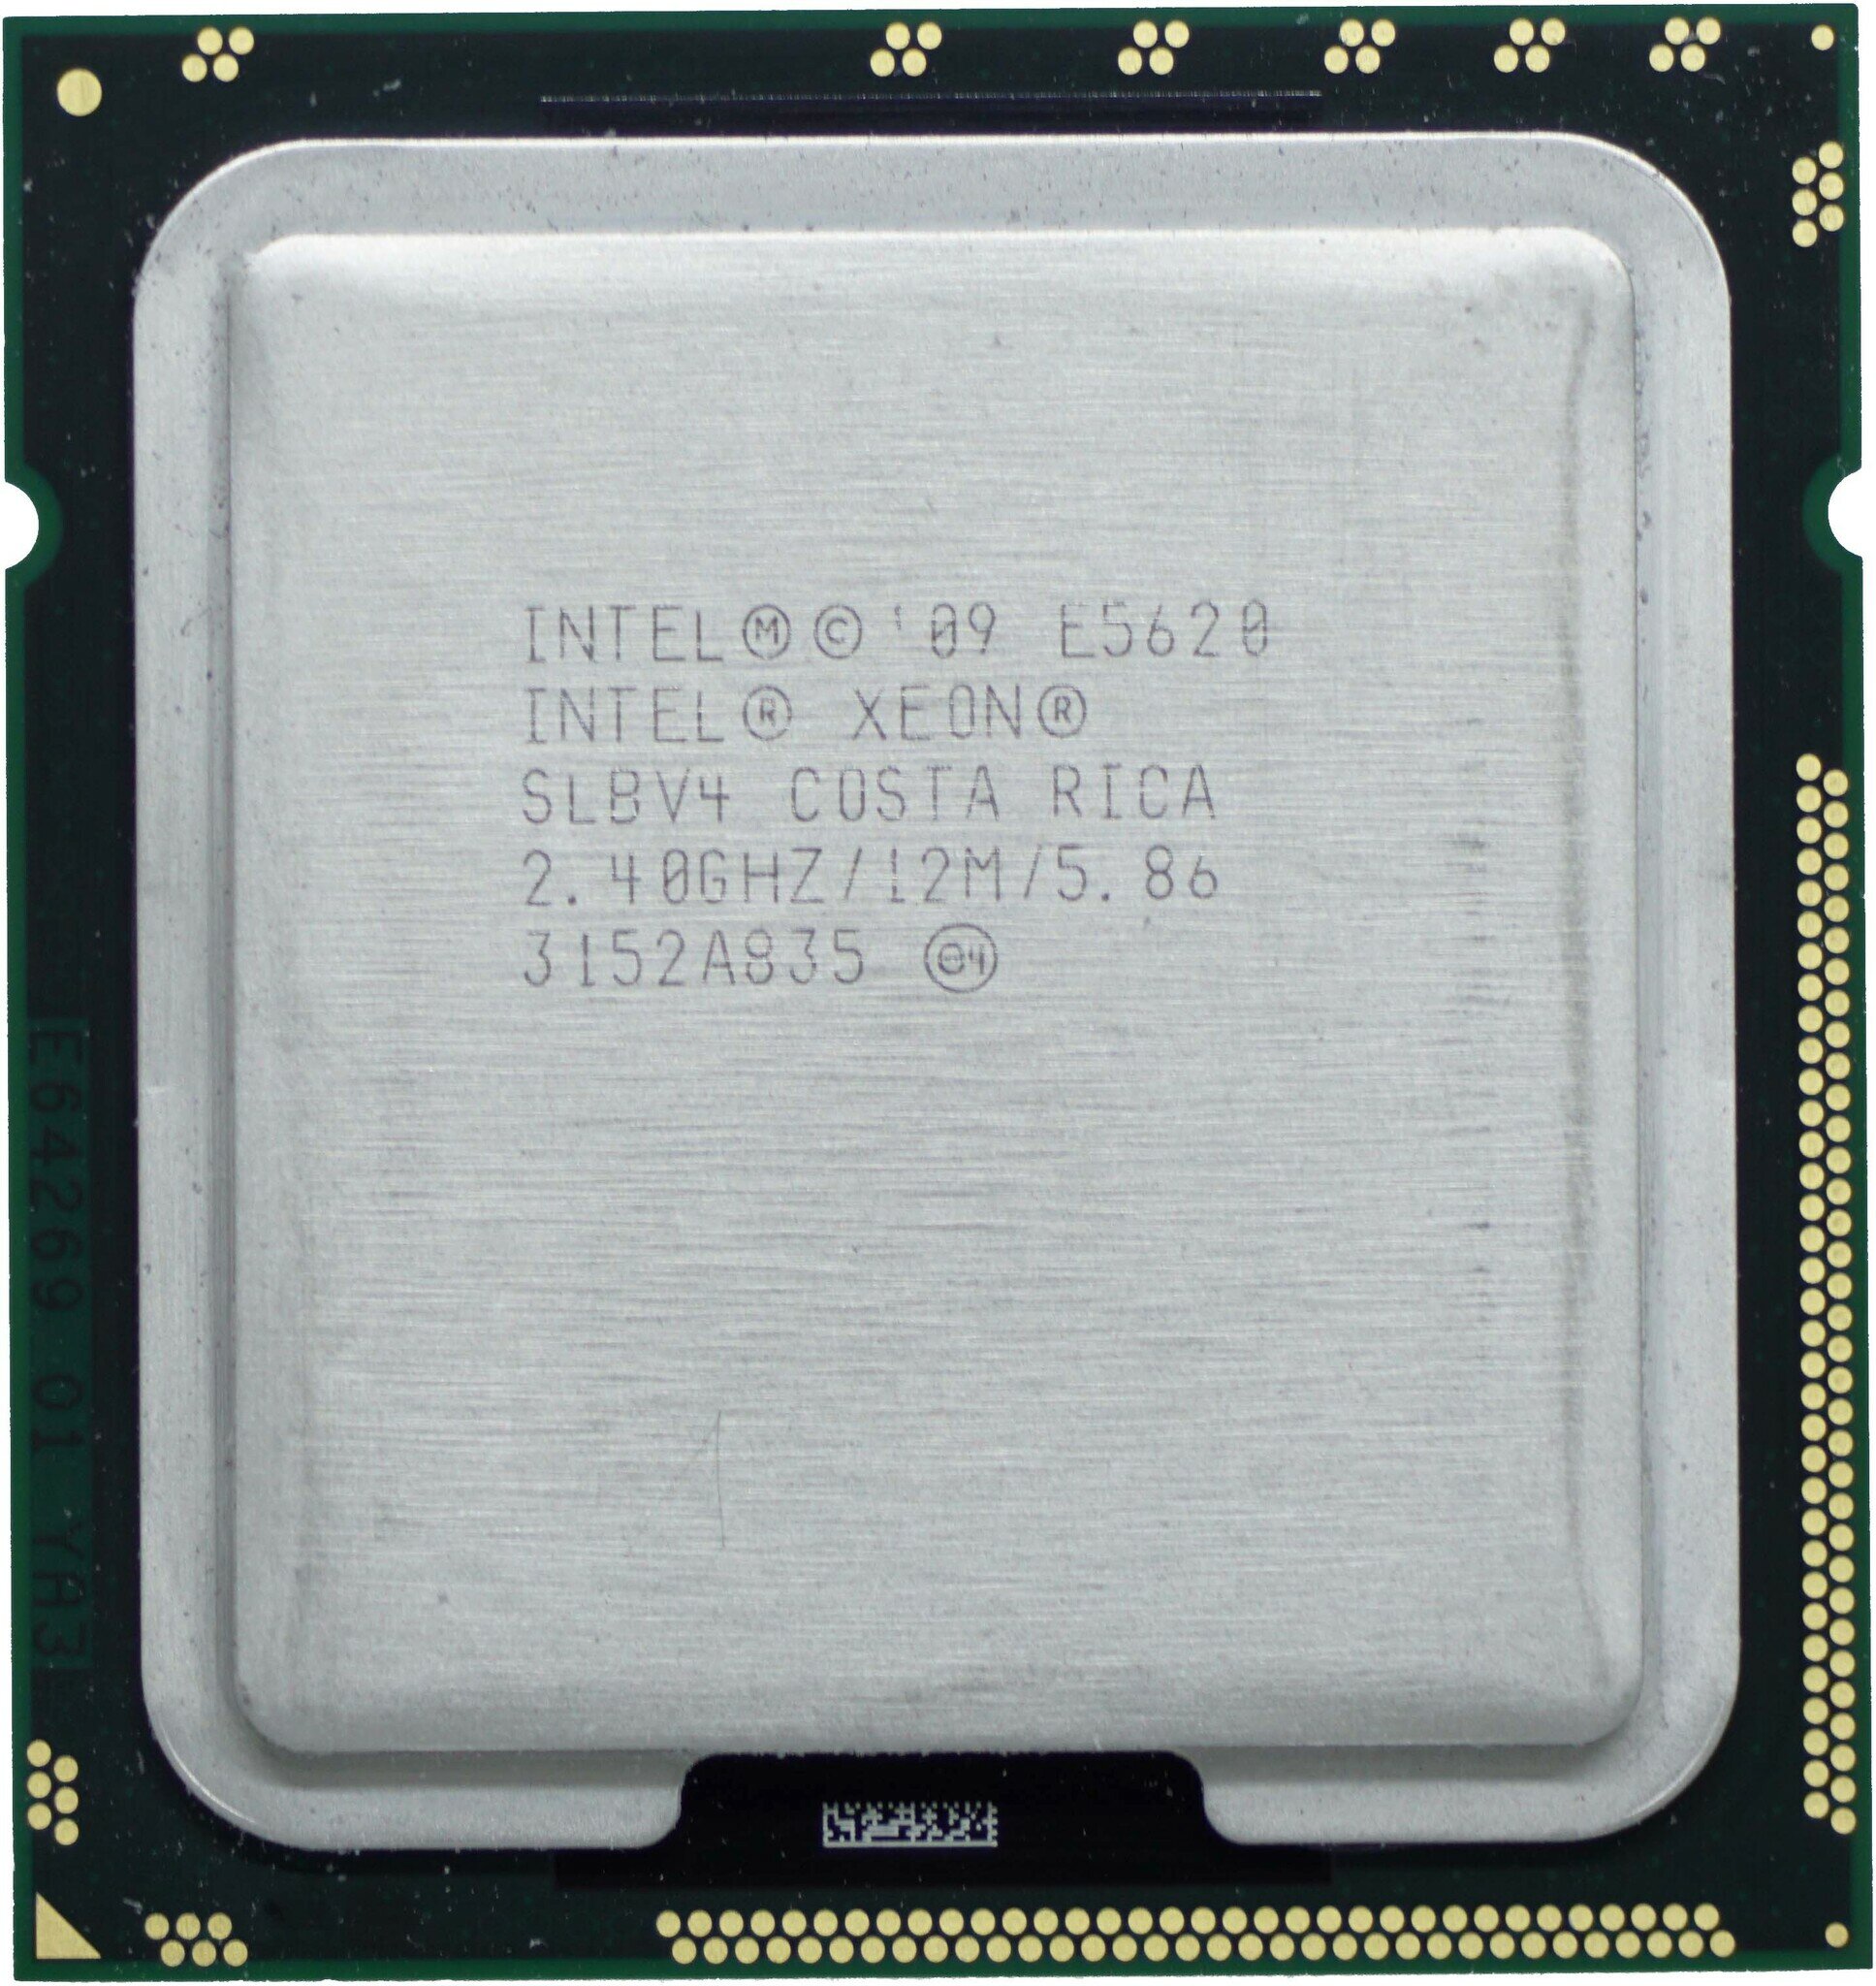 Процессор Intel Процессор Xeon E5620 (12M Cache, 2.40 GHz, 5.86 GT/s) SLBV4